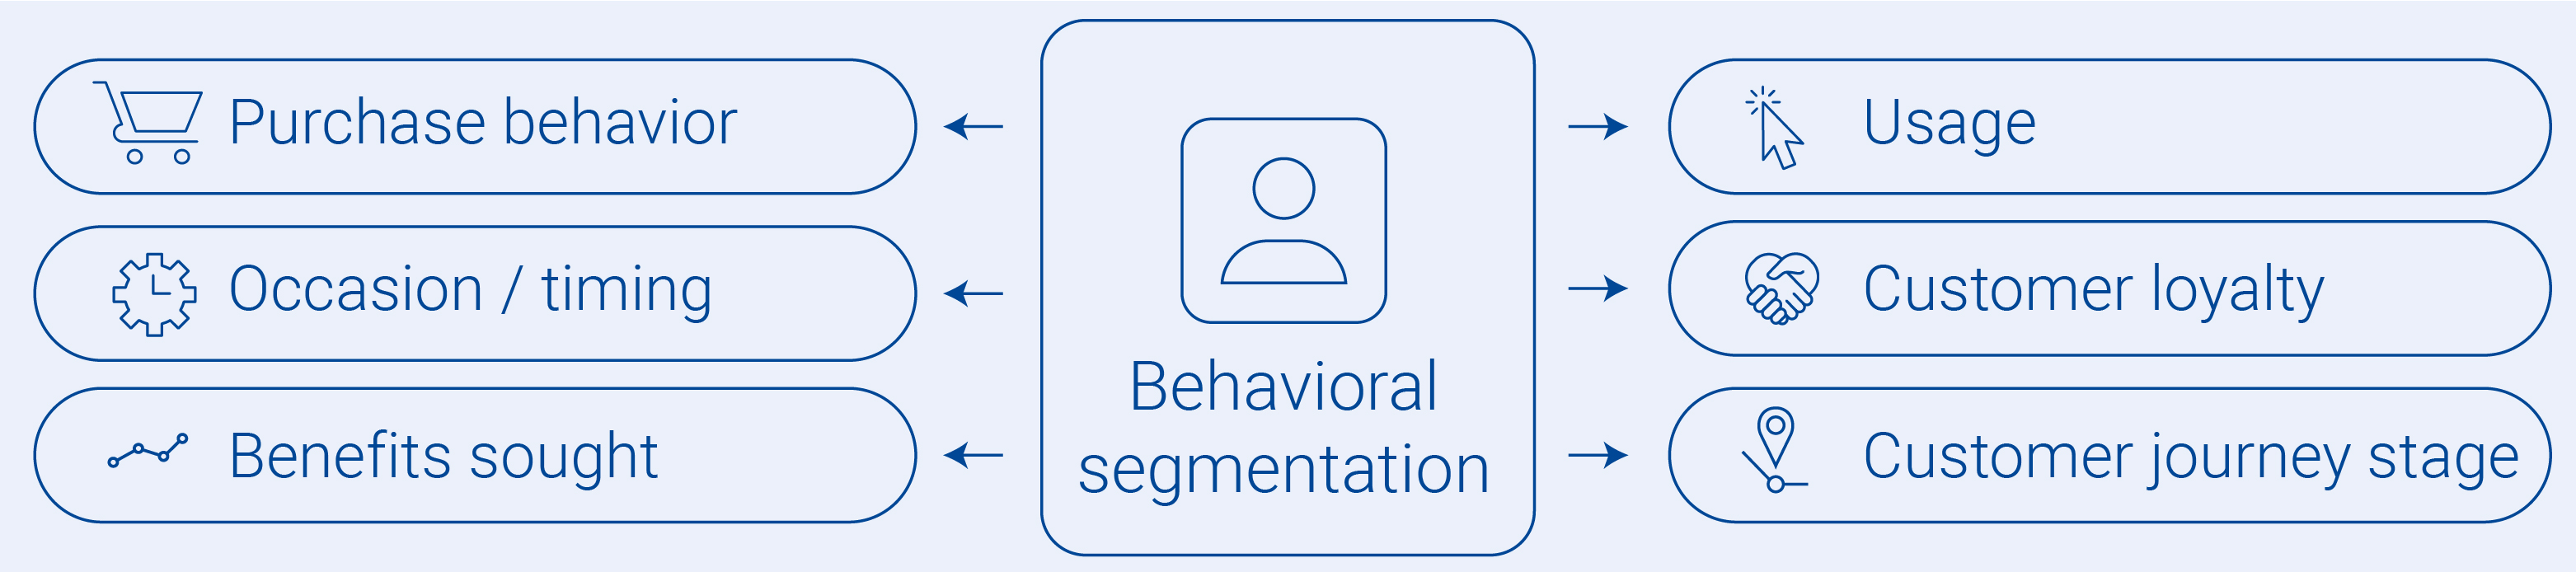 Types of behavioral segmentation.